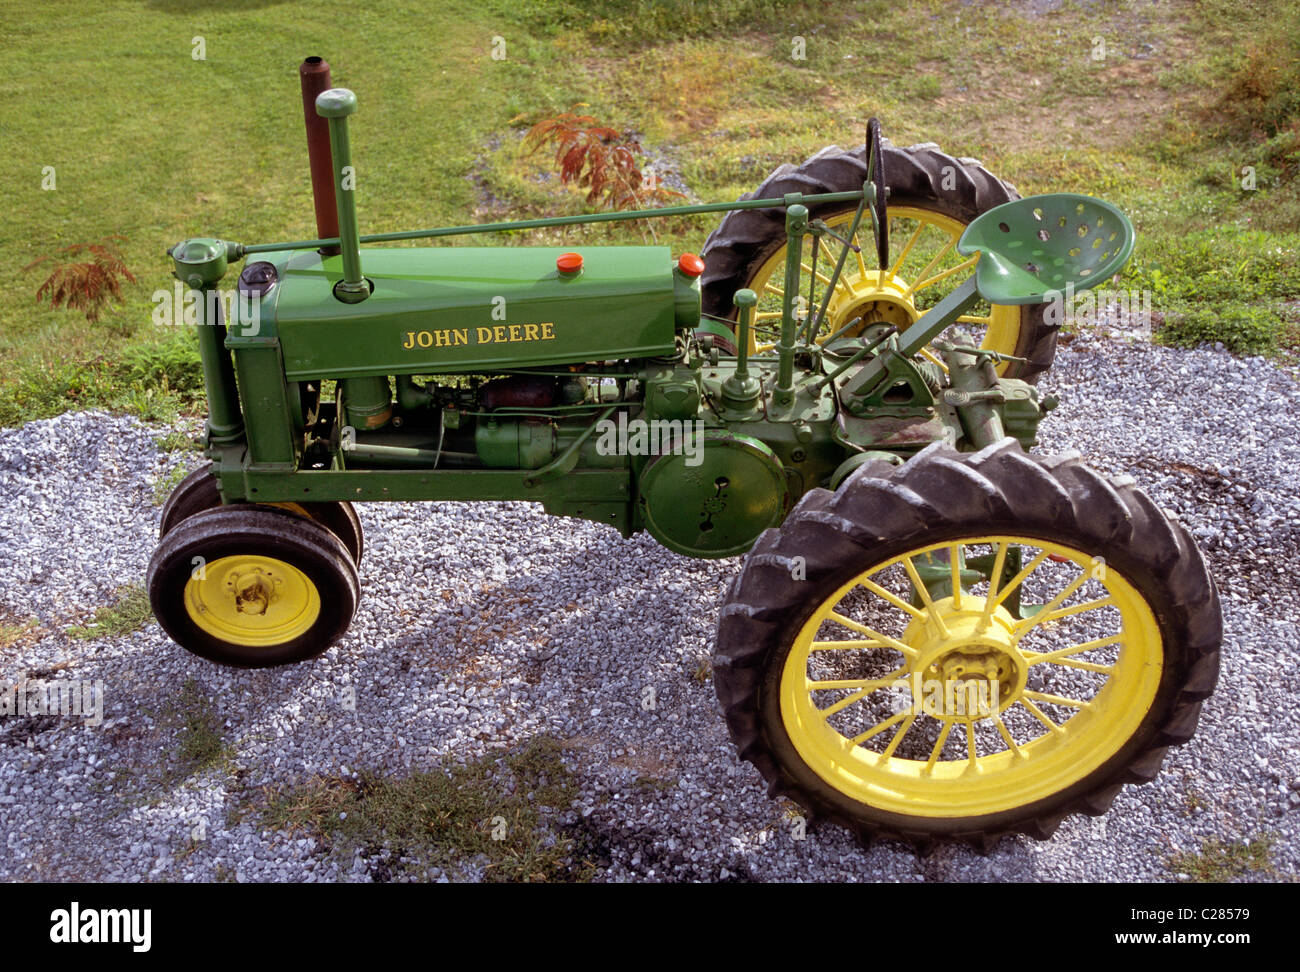 File:John Deere 1950 Traktor.jpg - Wikimedia Commons